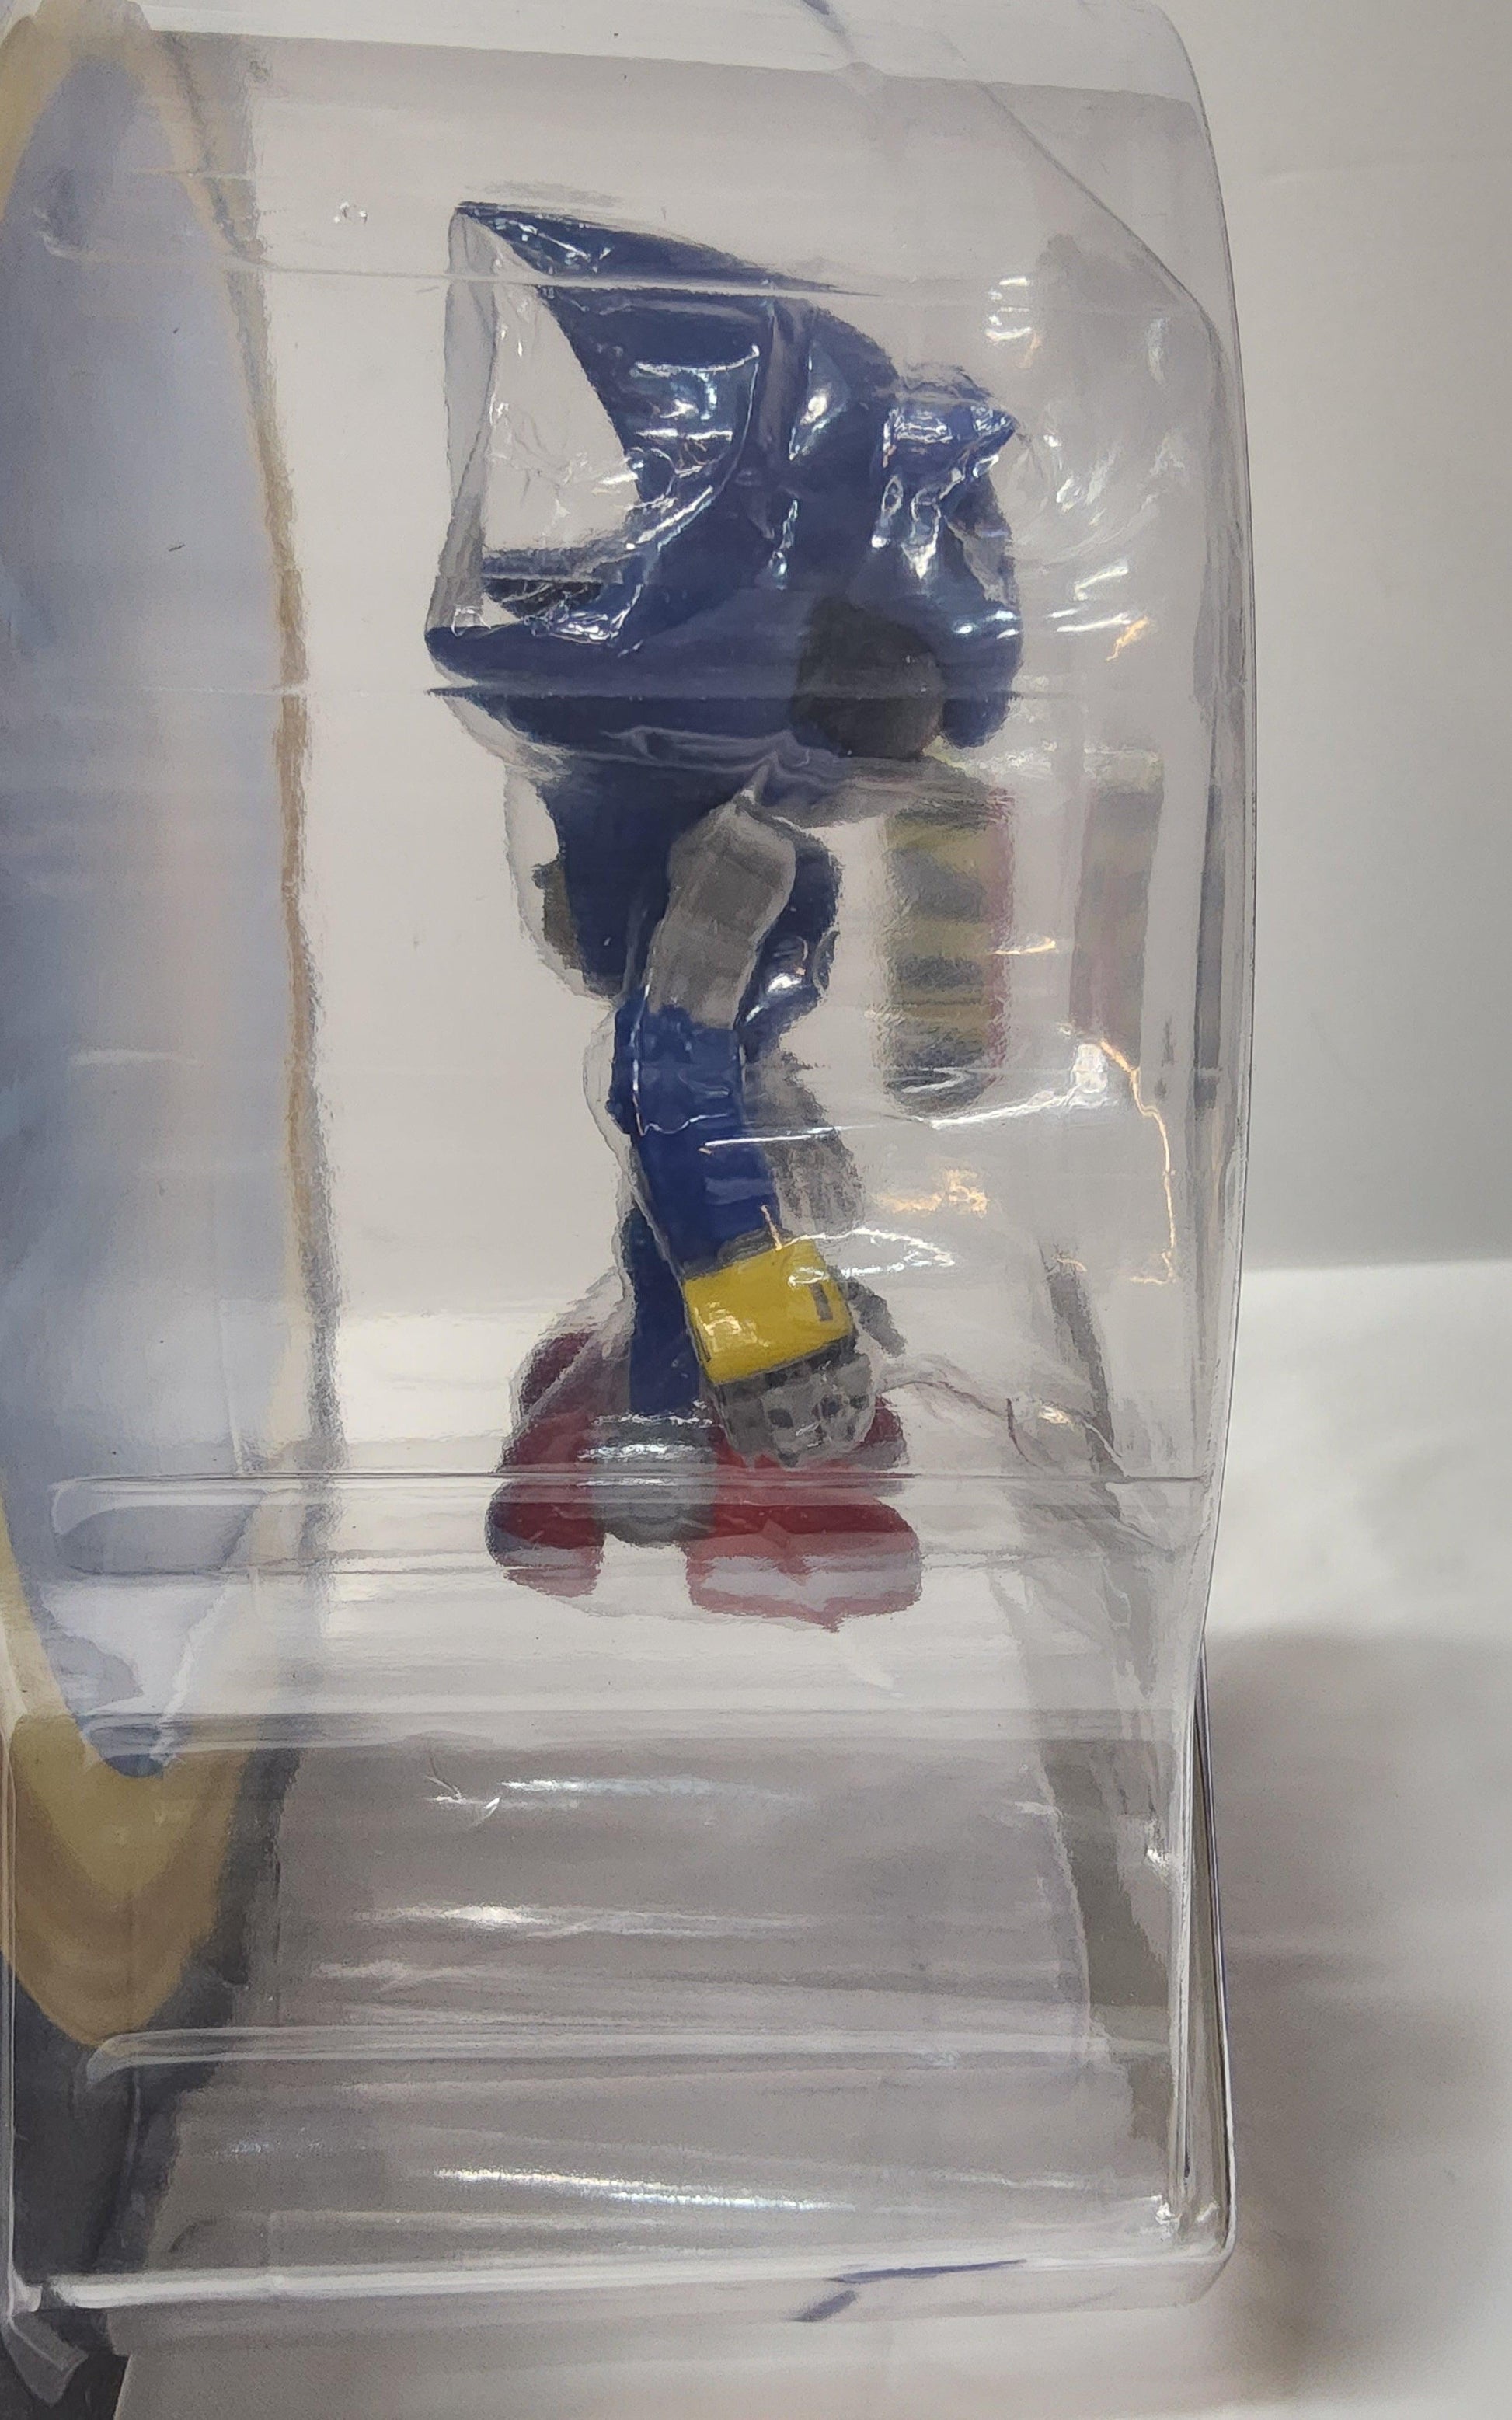 Jakks Pacific Sonic the Hedgehog Metal Sonic 4" Action Figure & Accessory - Logan's Toy Chest